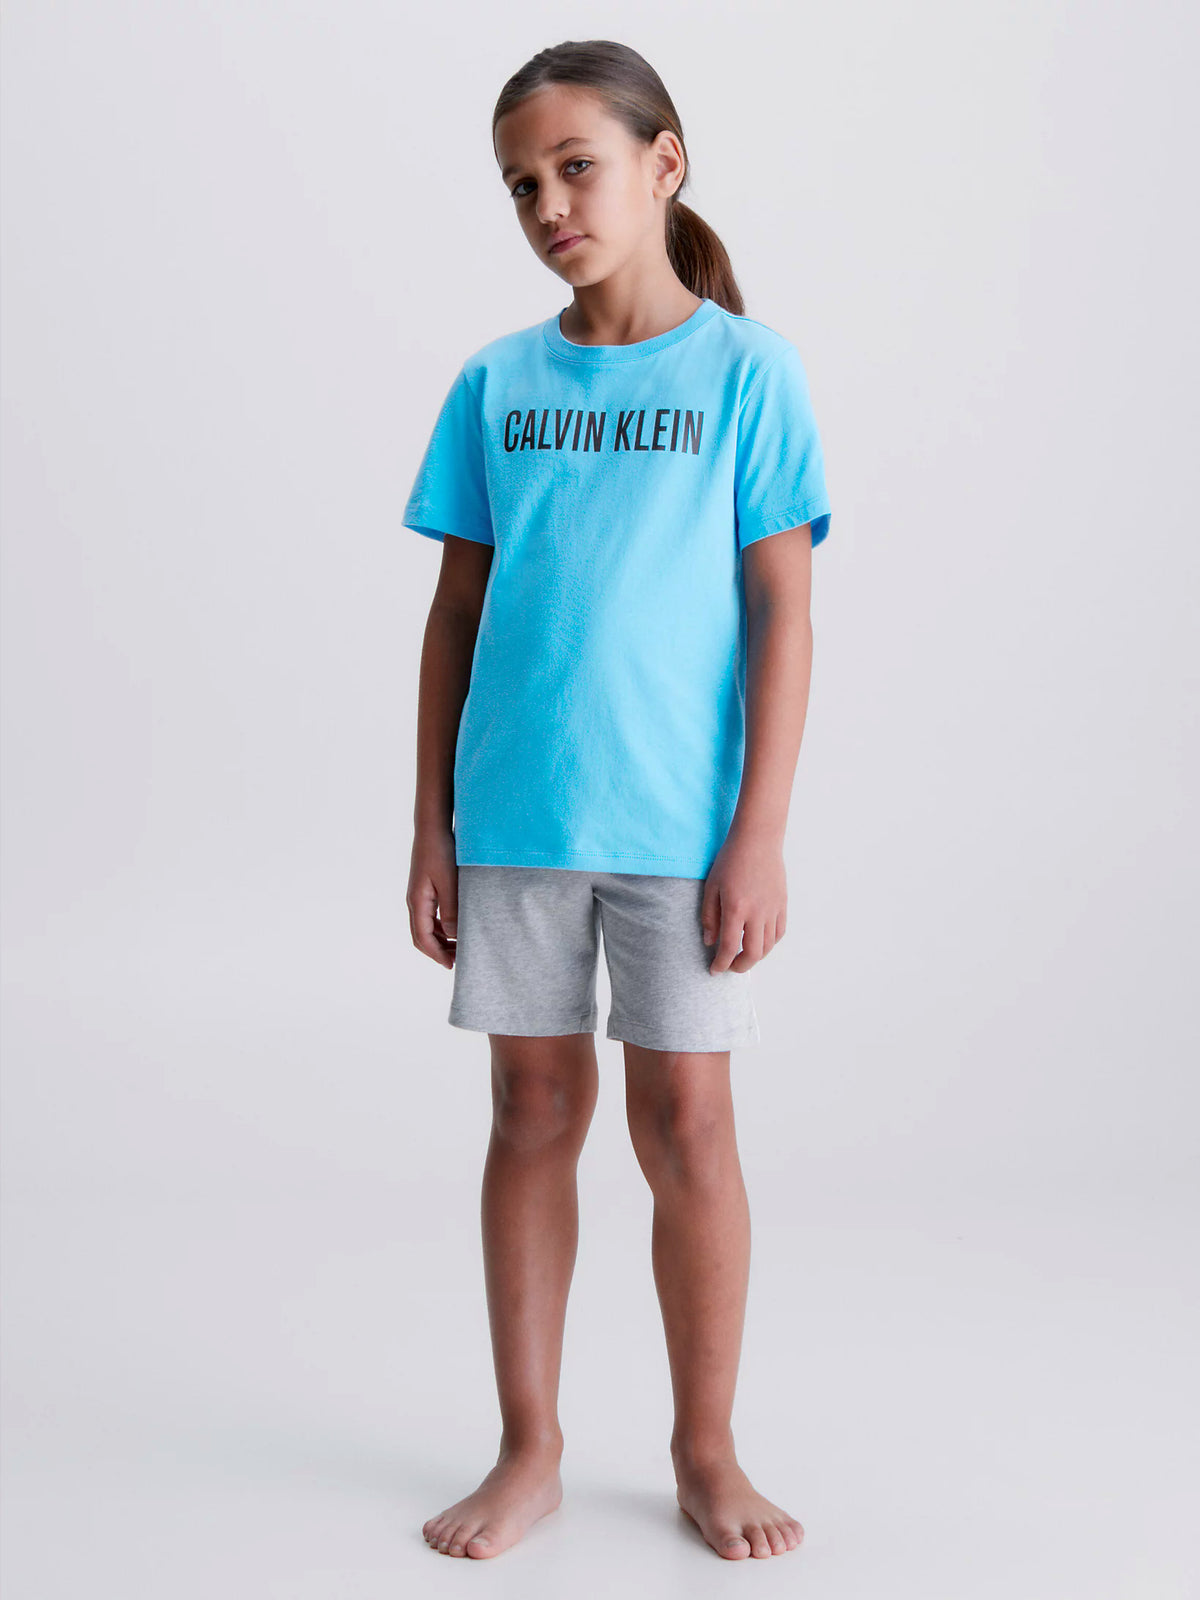 Calvin Klein Boys Intense Power T-Shirt - 2 Pack, 02, B70B700431, Pebblestone/ W/ Bluecrush